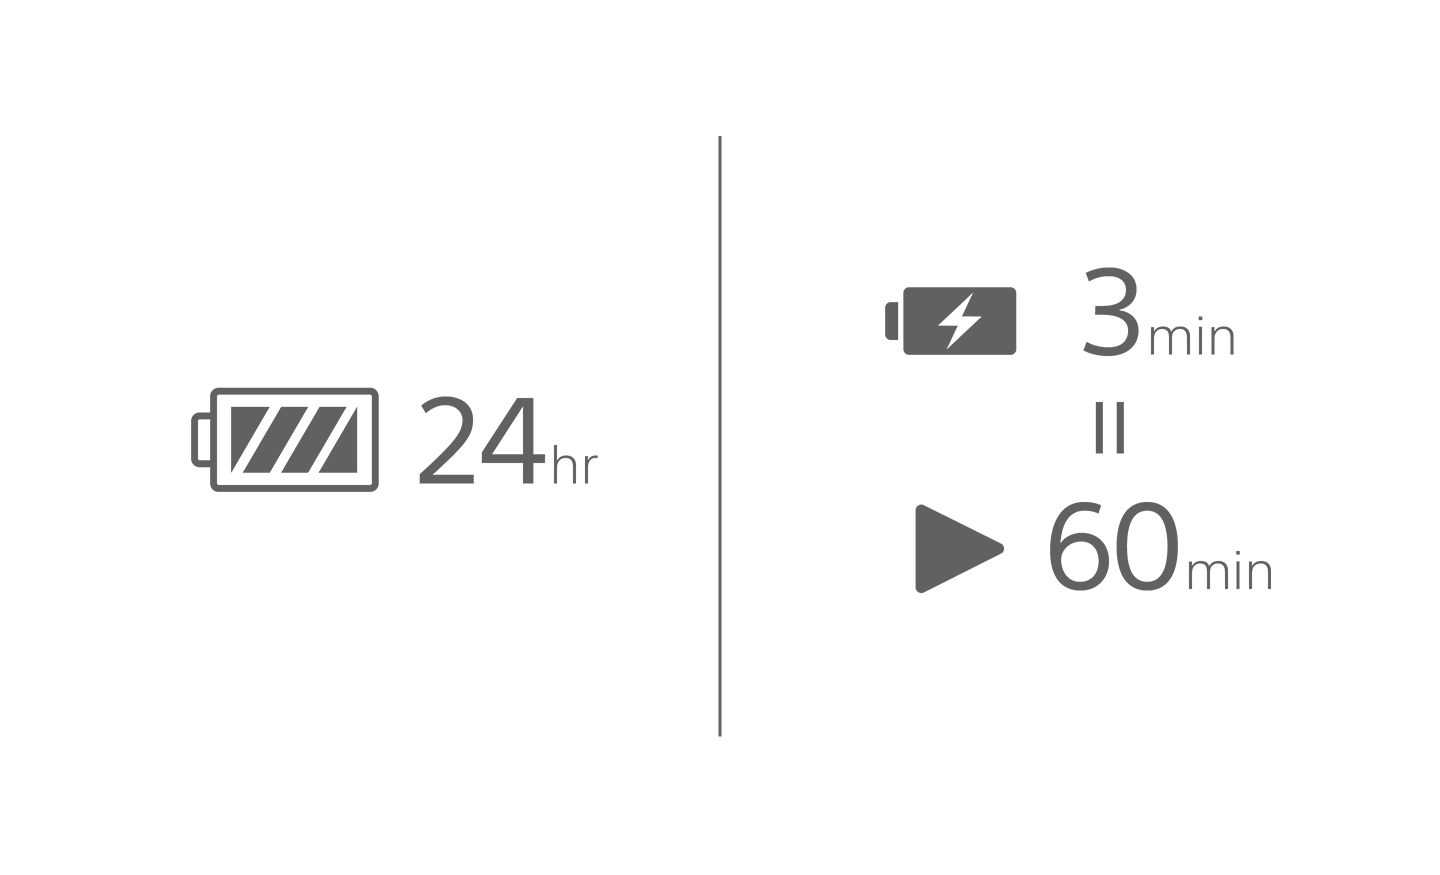 Slika ikone baterije s tekstom “24 hr” i druge baterije sa simbolom punjenja i tekstom “3 min” iznad ikone reprodukcije s tekstom “60 min”